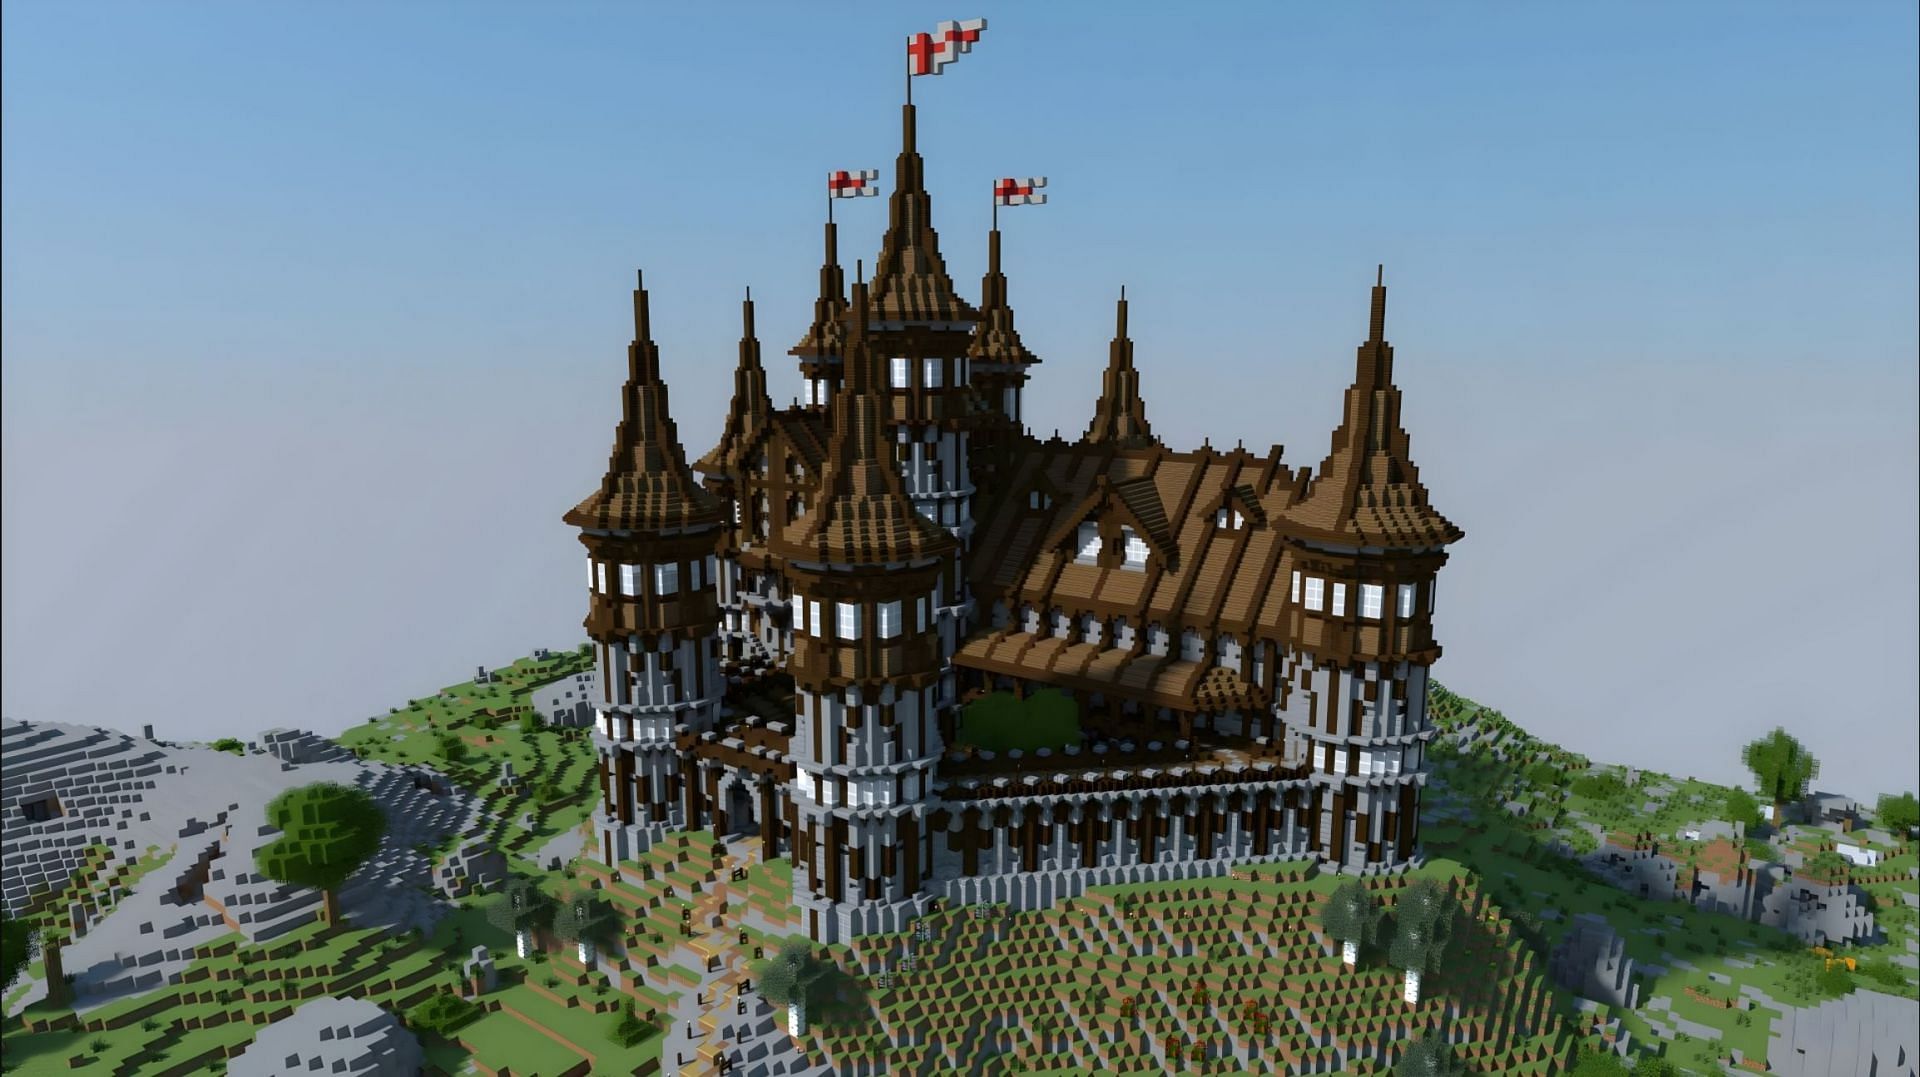 Minecraft Blueprints Castle